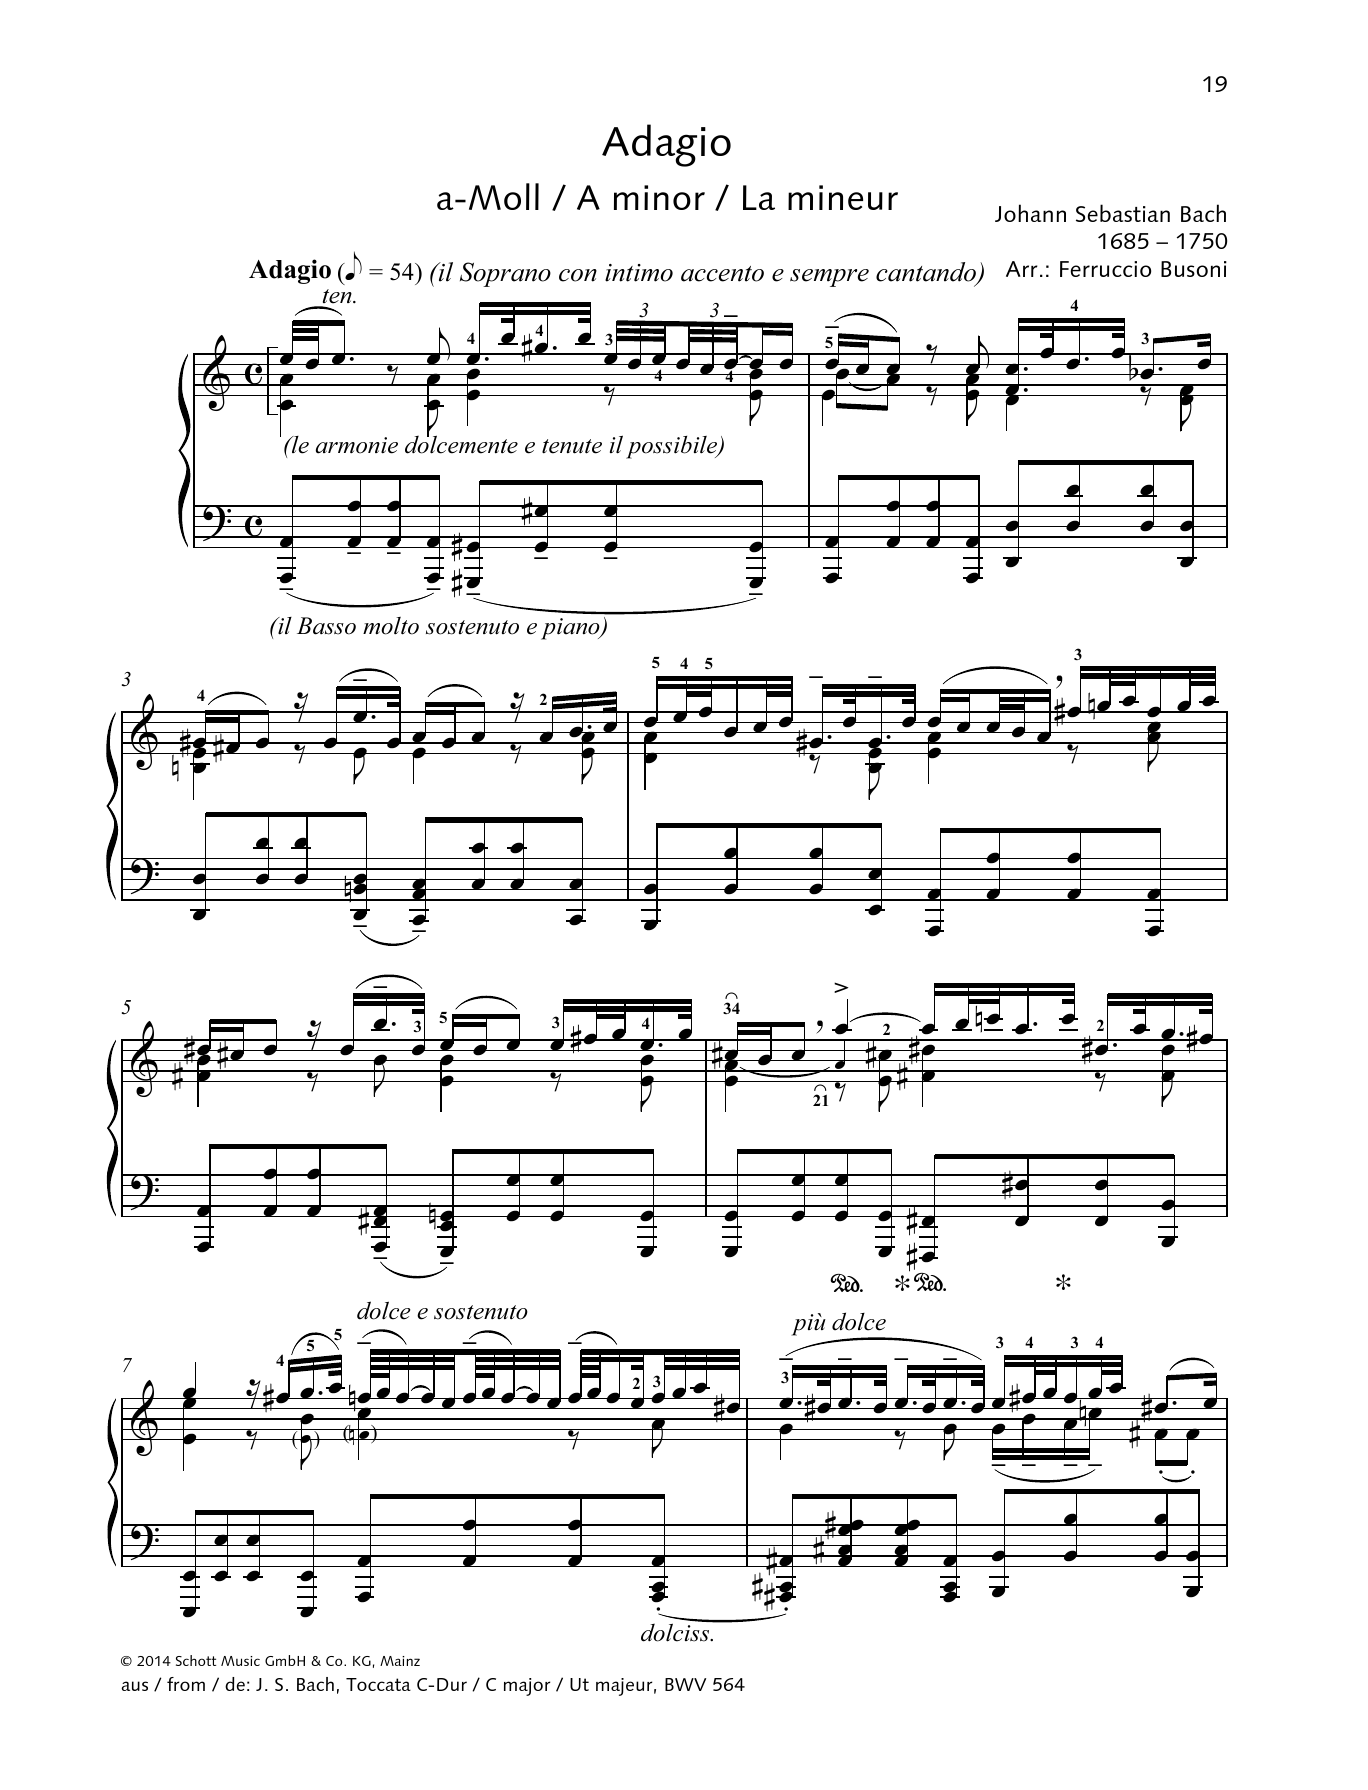 Johann Sebastian Bach Adagio Sheet Music Notes & Chords for Piano Solo - Download or Print PDF